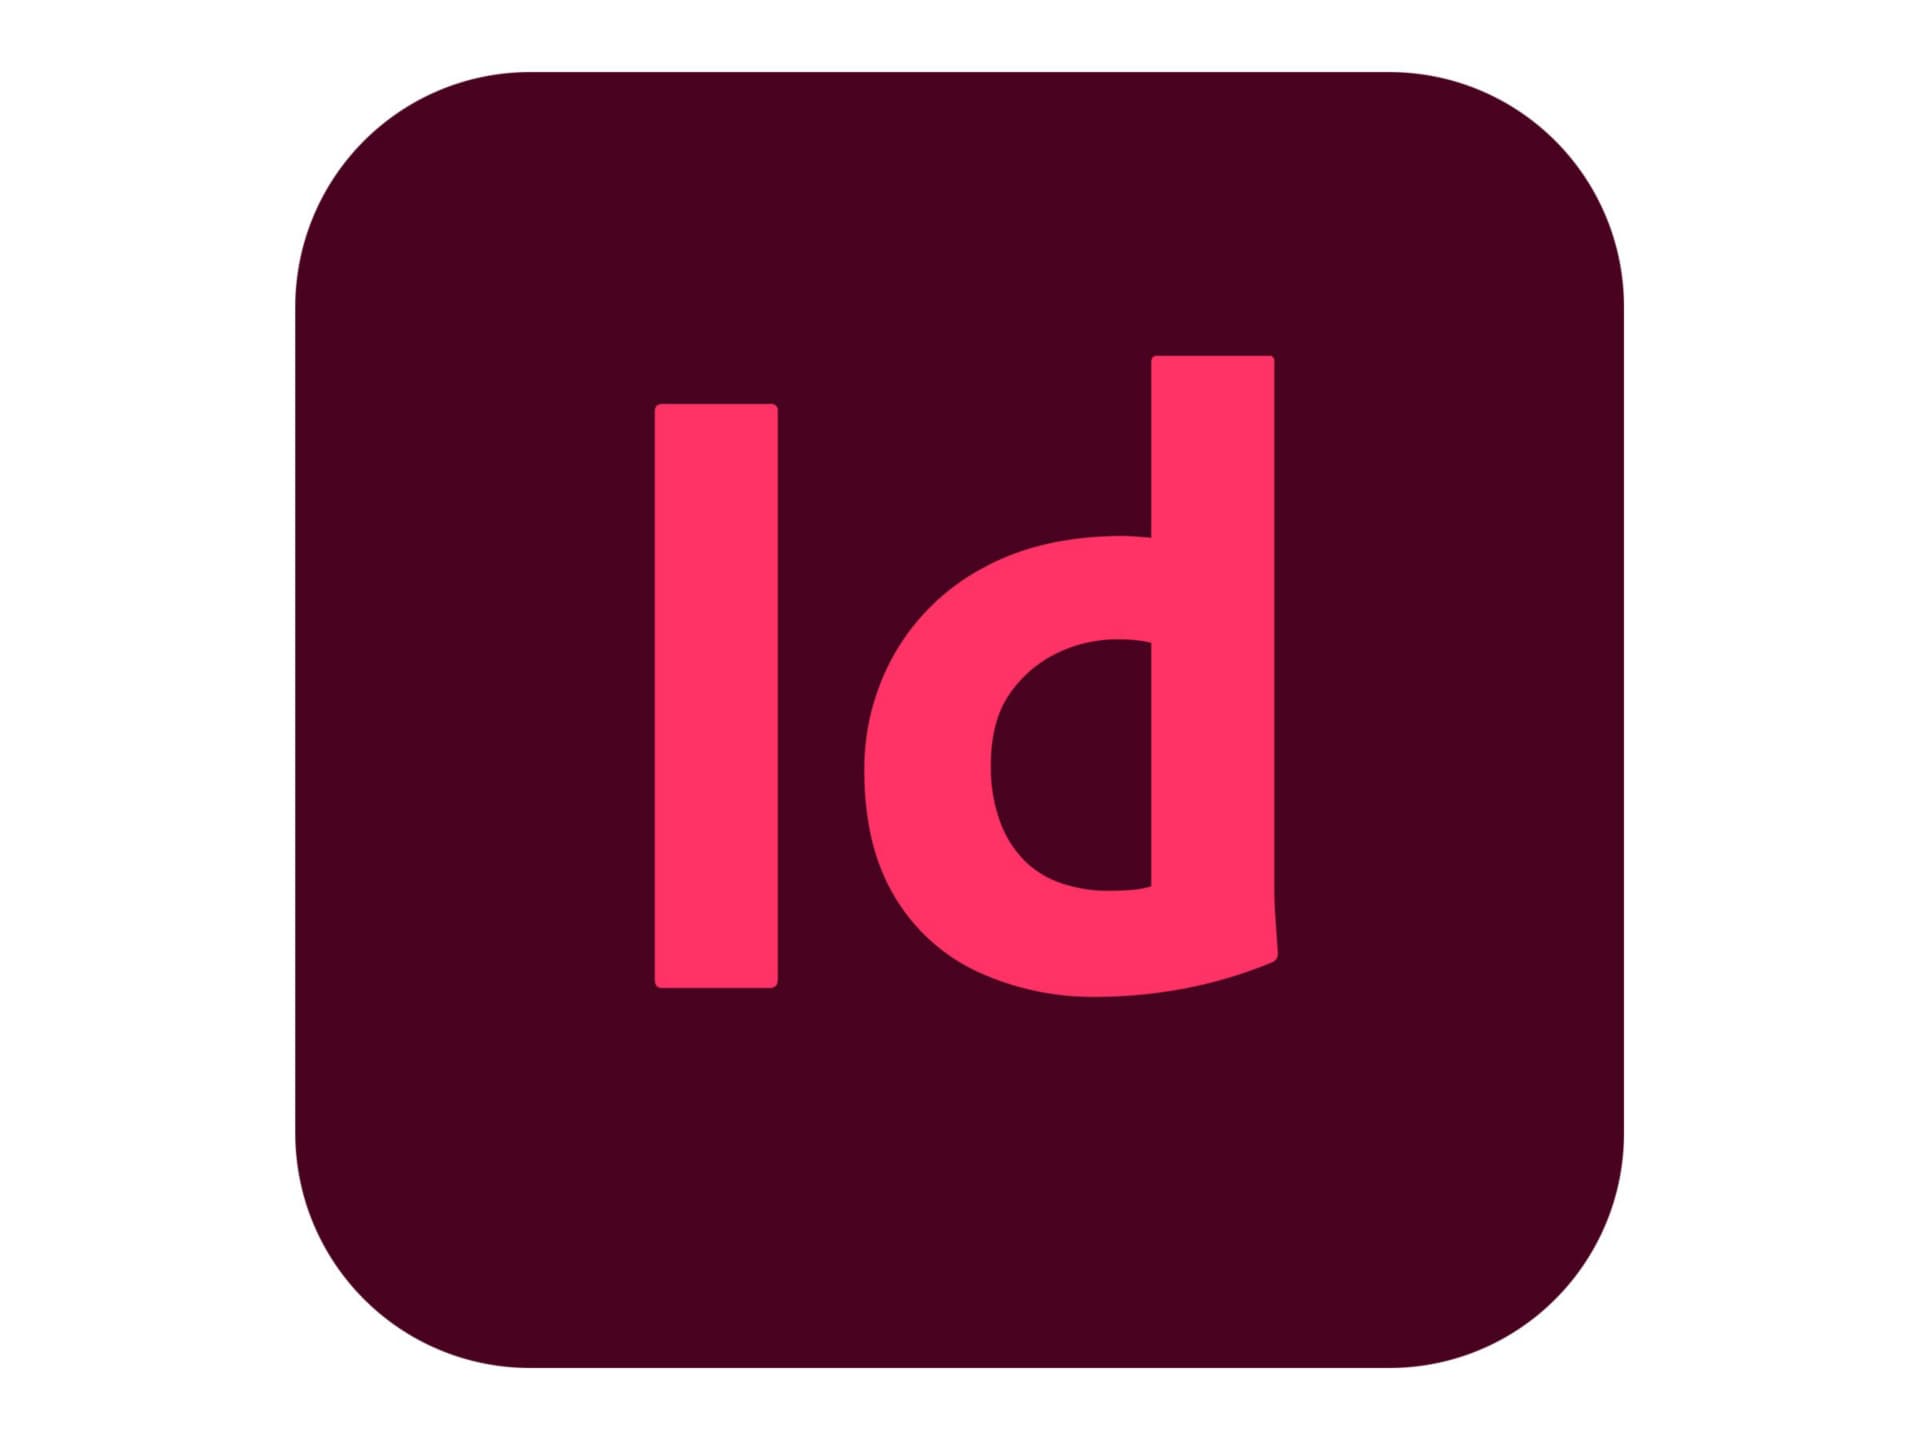 Adobe InDesign CC for Enterprise - Subscription New (6 months) - 1 named user